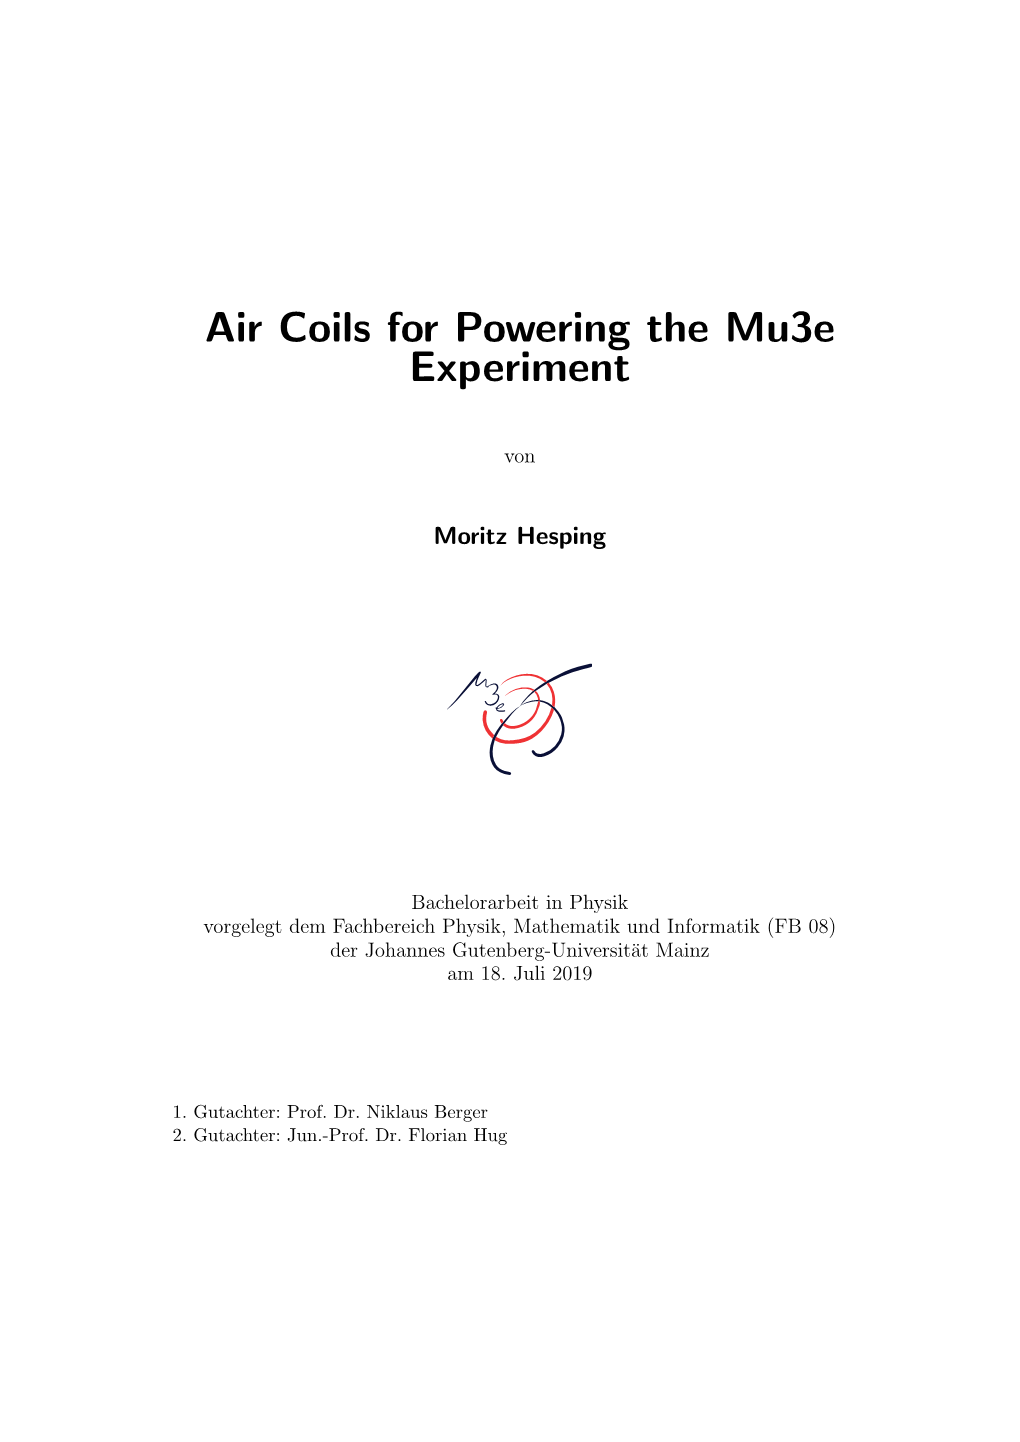 Air Coils for Powering the Mu3e Experiment